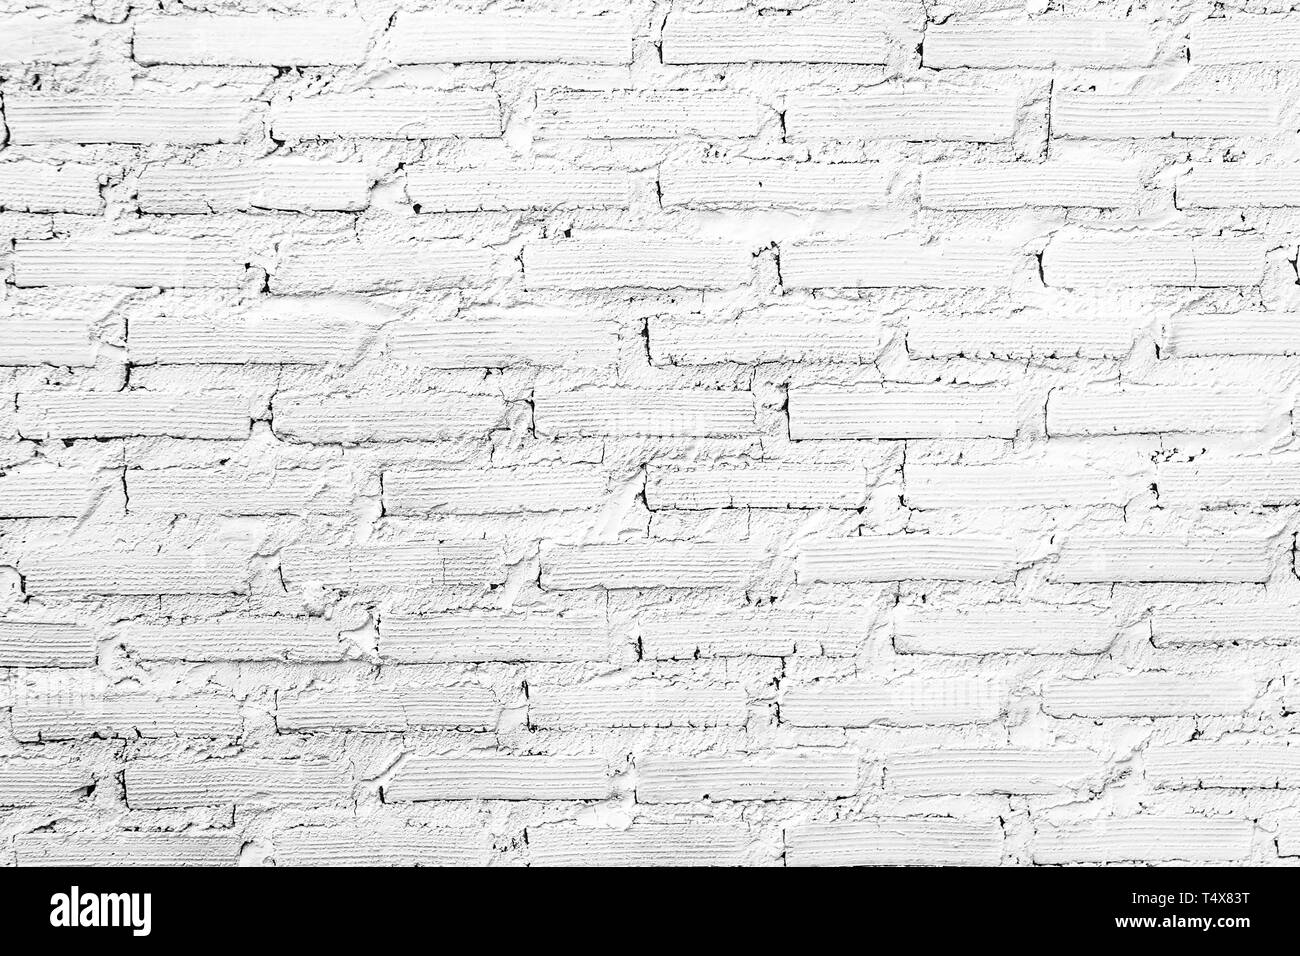 White brick wall vintage texture background. Stock Photo